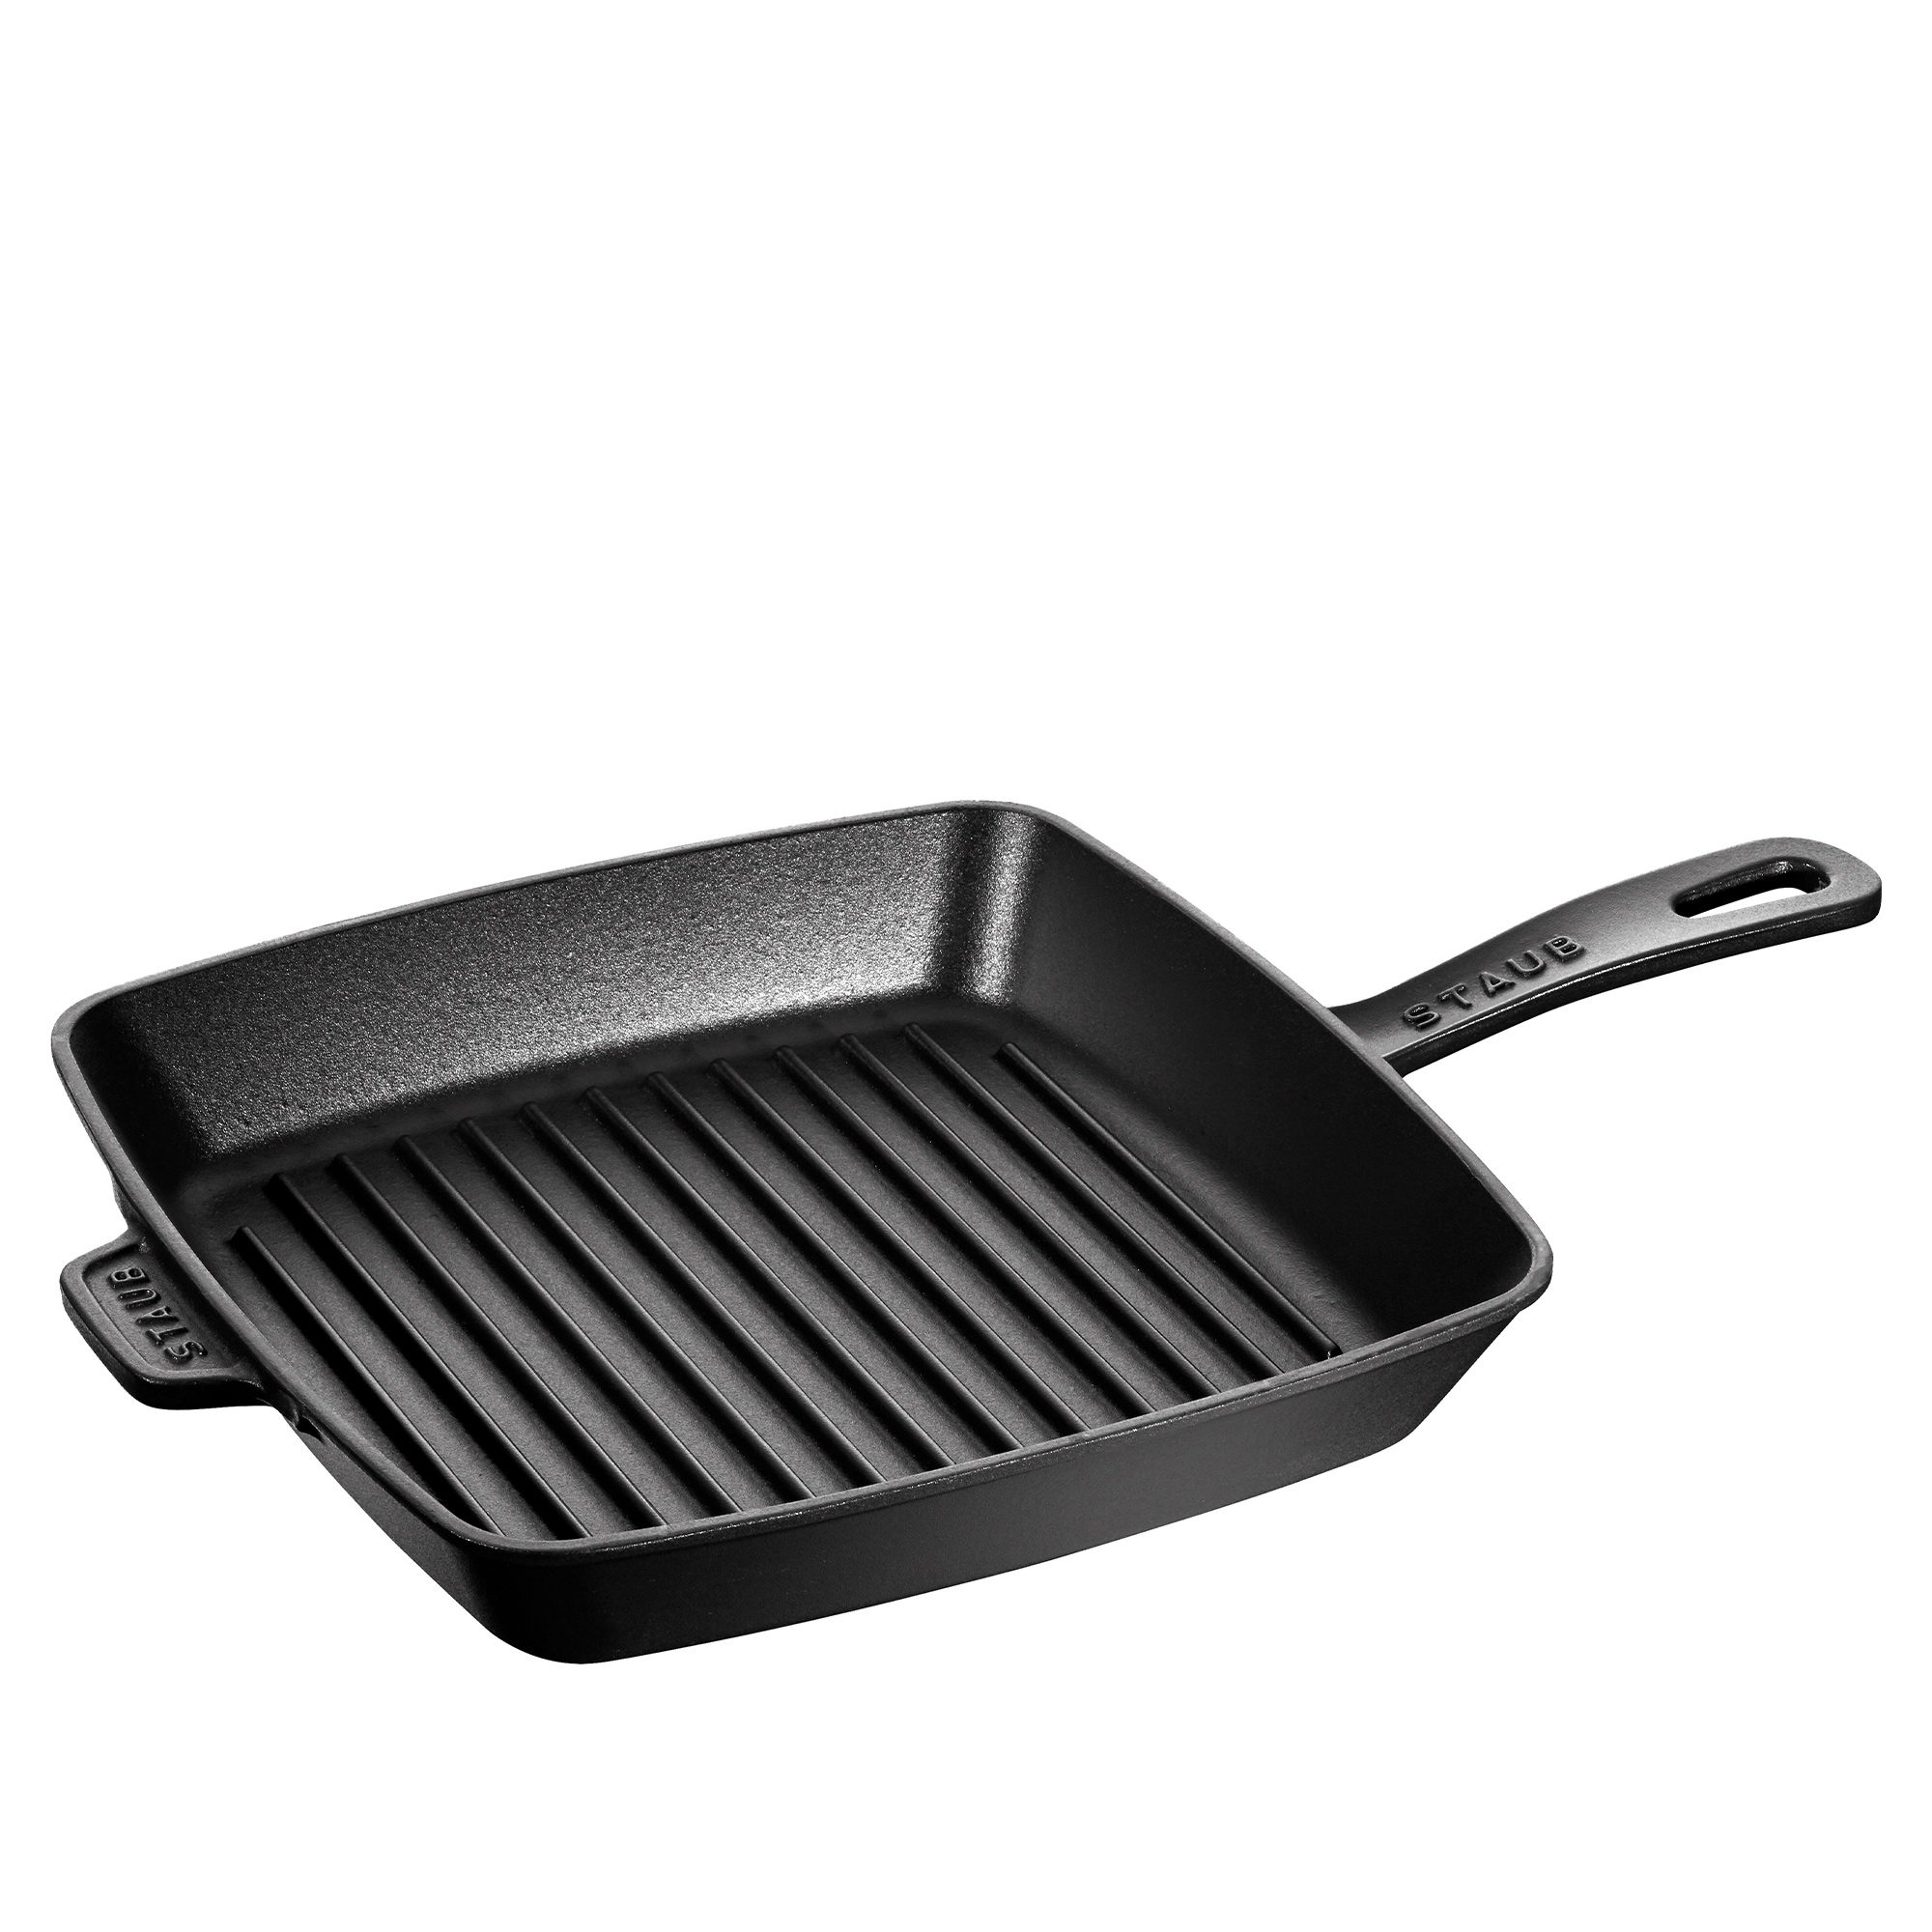 Staub - grill pan - square - 26 cm